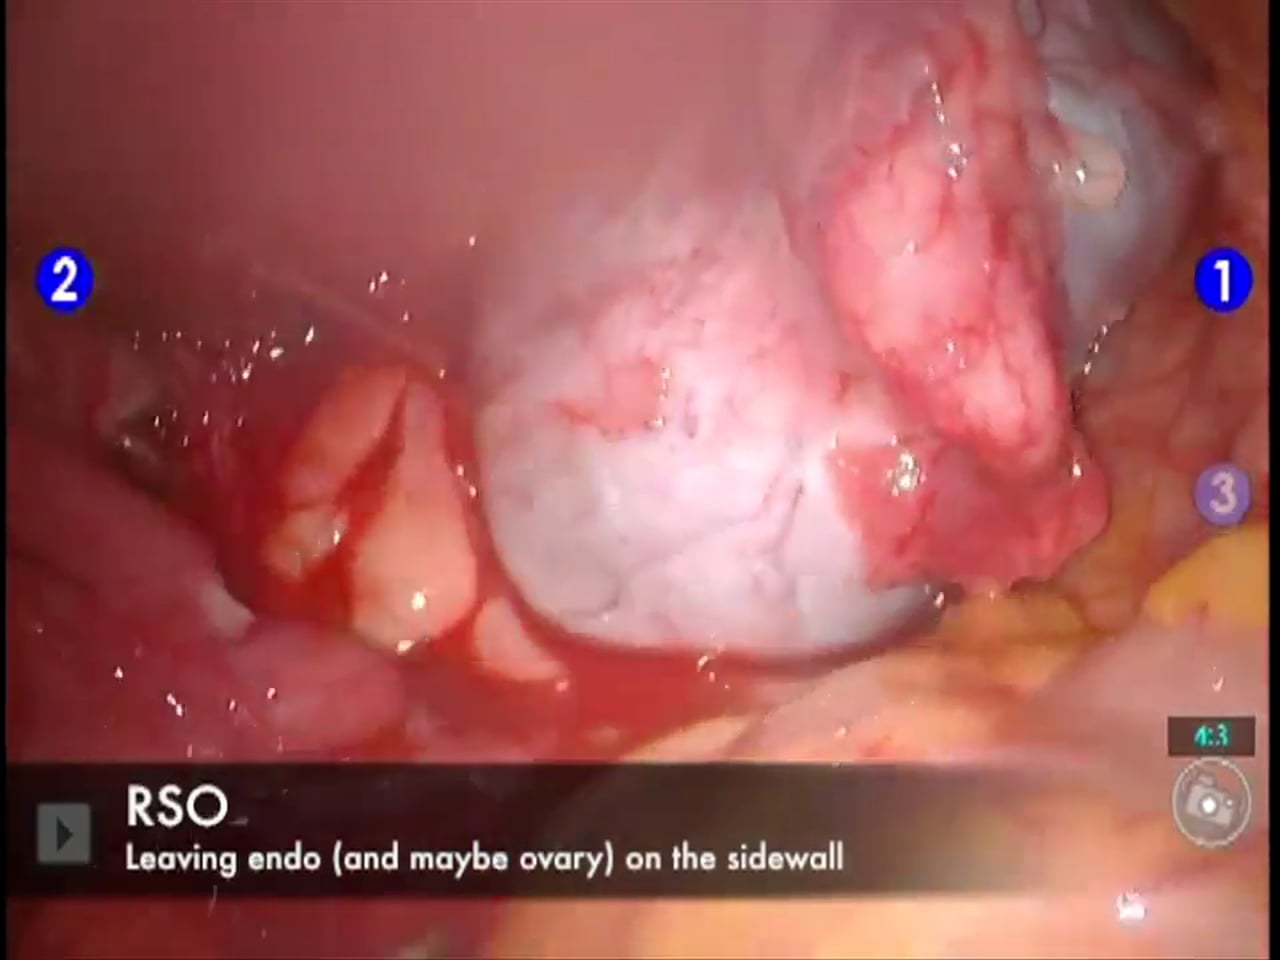 RSO leaving ovary on sidewall